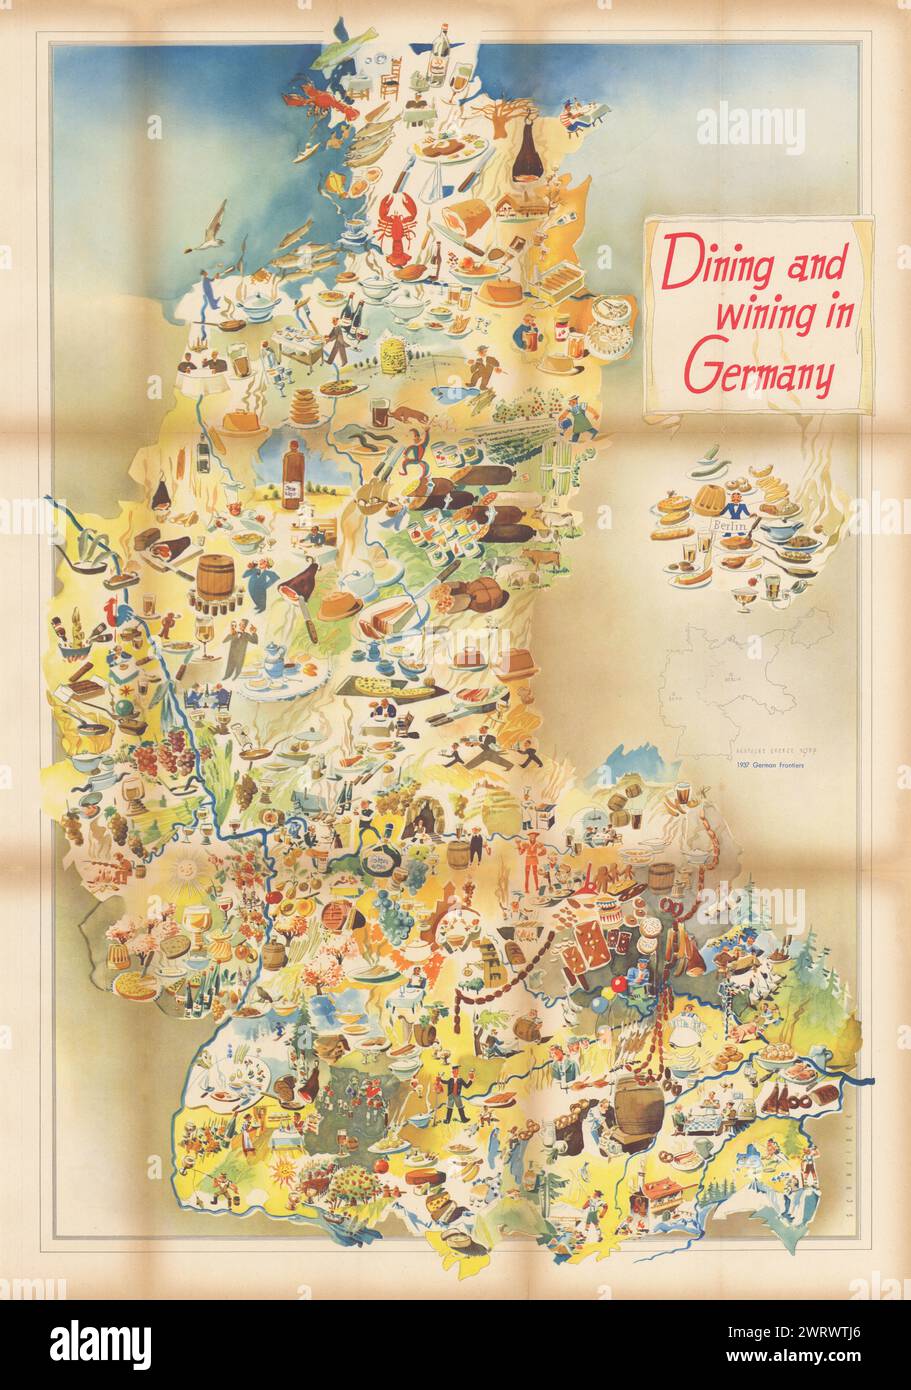 Essen & Trinken in Deutschland. Gastronomische touristische Bildplakat Karte 1953 Stockfoto